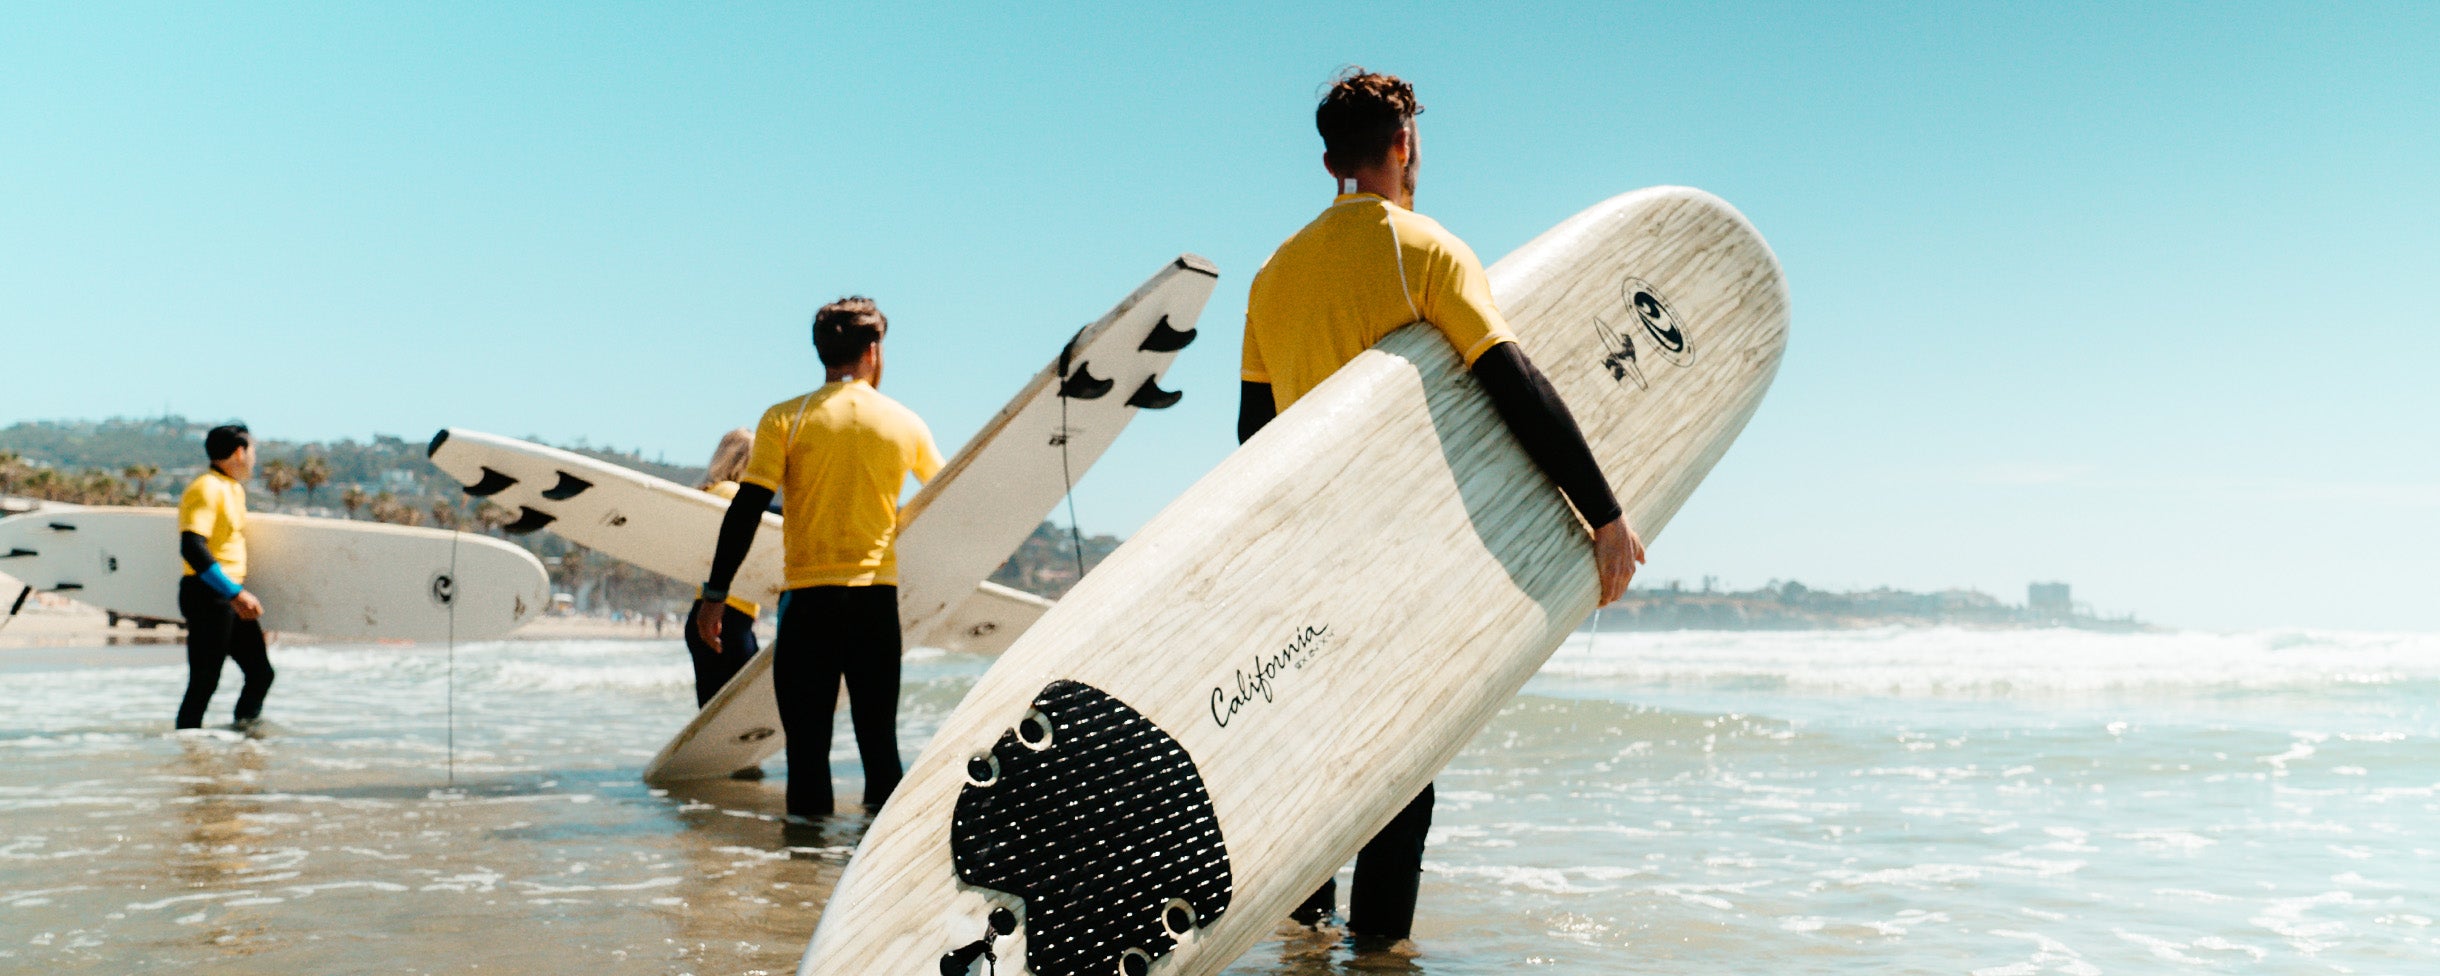 Rentals - Everyday California Surfboard Rentals. Cute surfer girl paddling on a long board in San DIego, California